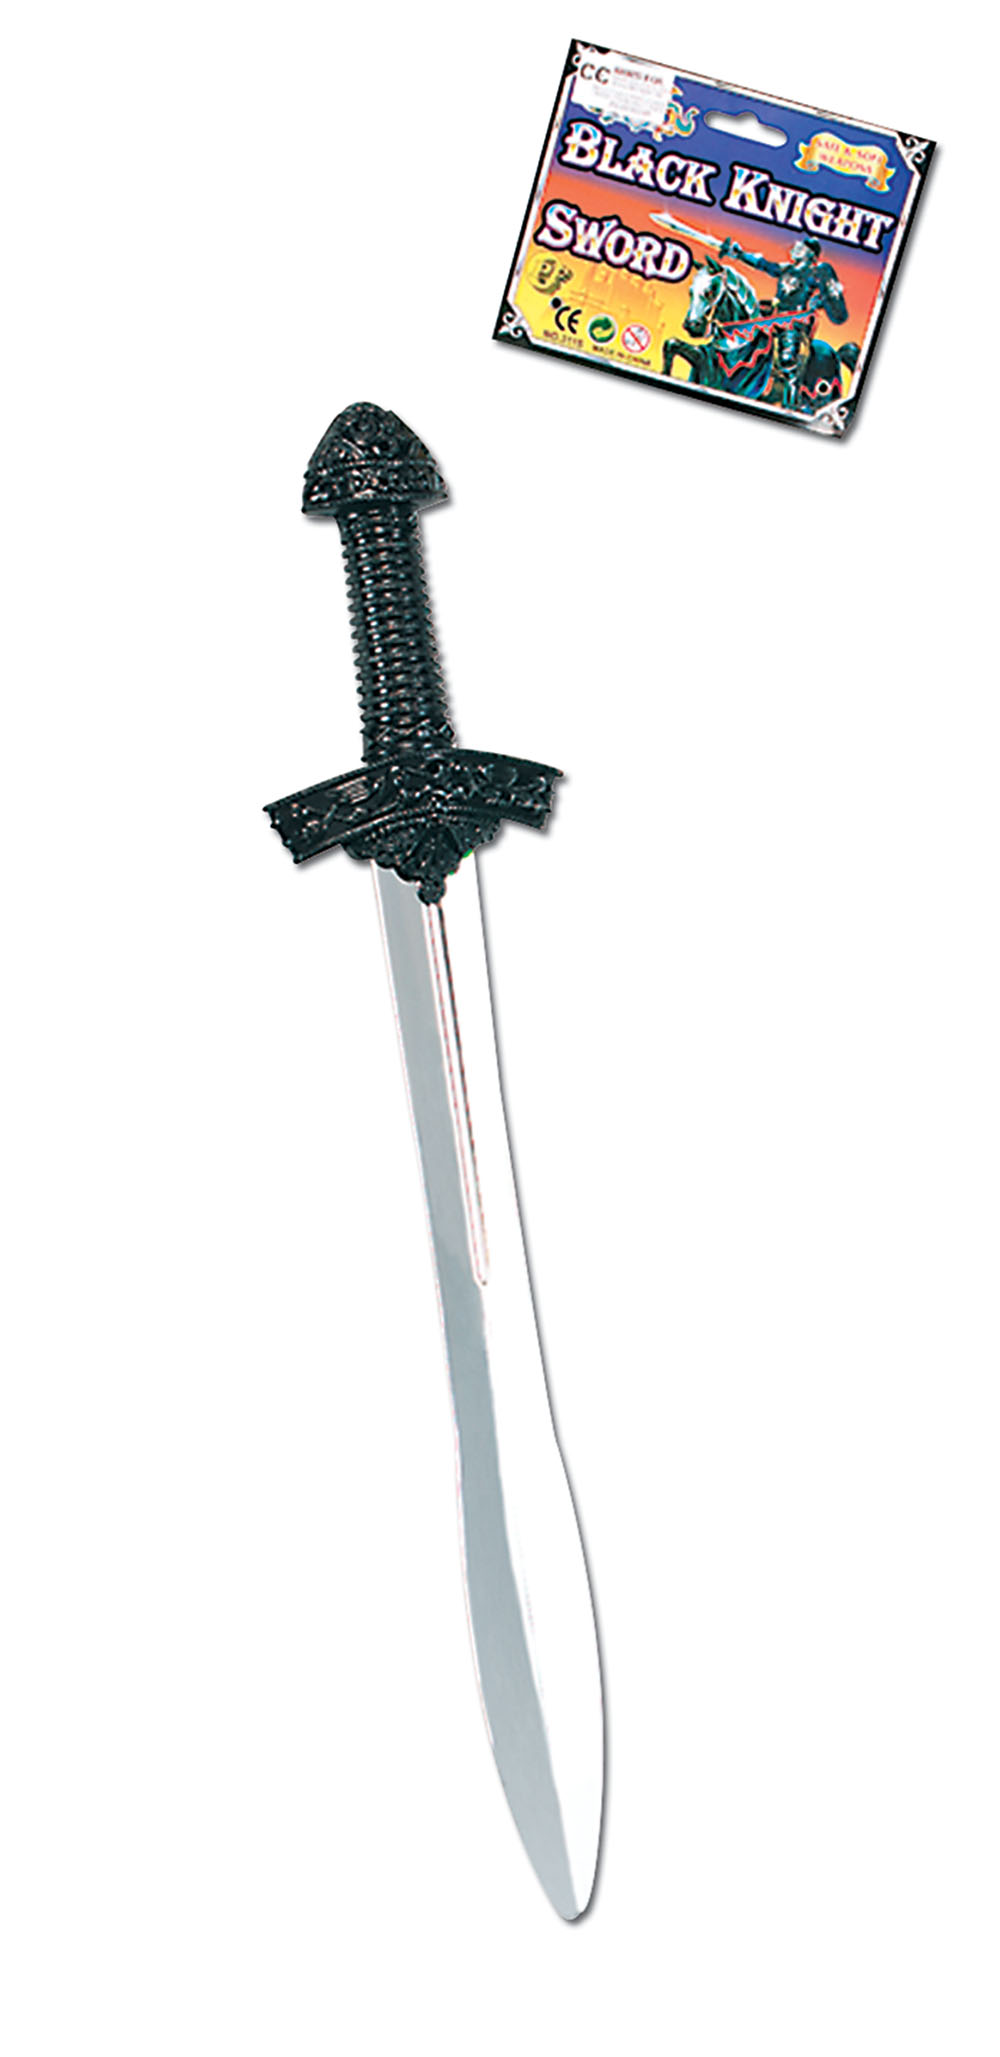 Black Knight Sword. Silver blade